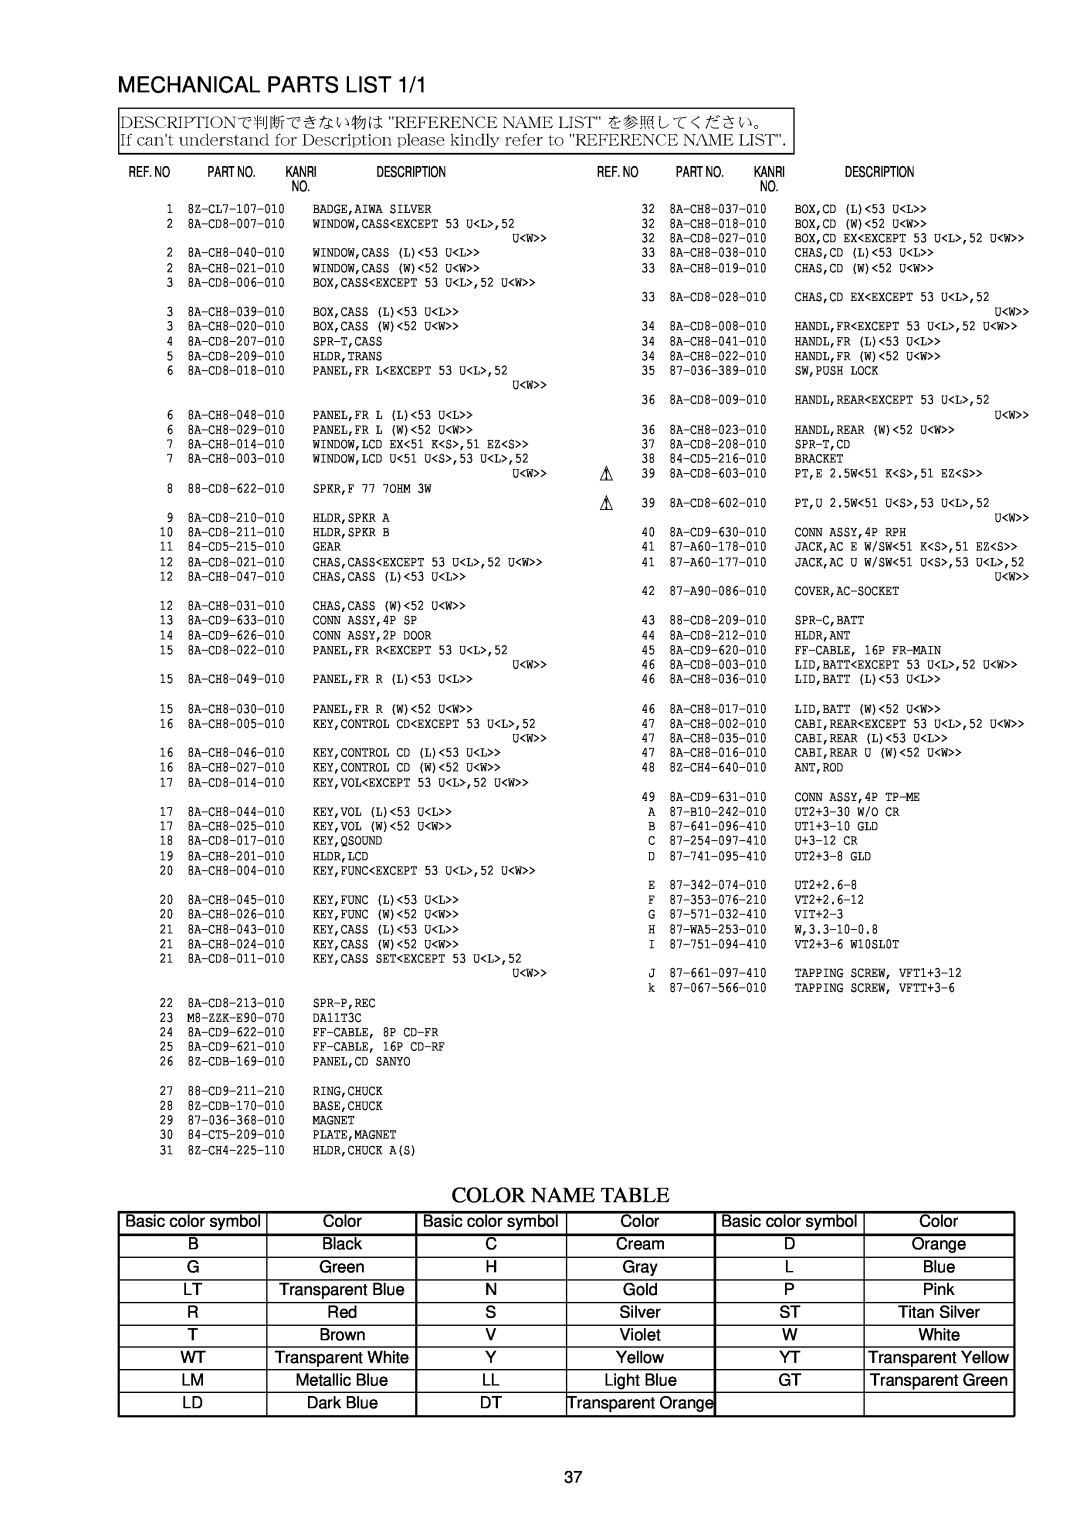 Aiwa CSD-TD53, CSD-TD51, CSD-TD52 service manual MECHANICAL PARTS LIST 1/1, Color Name Table 